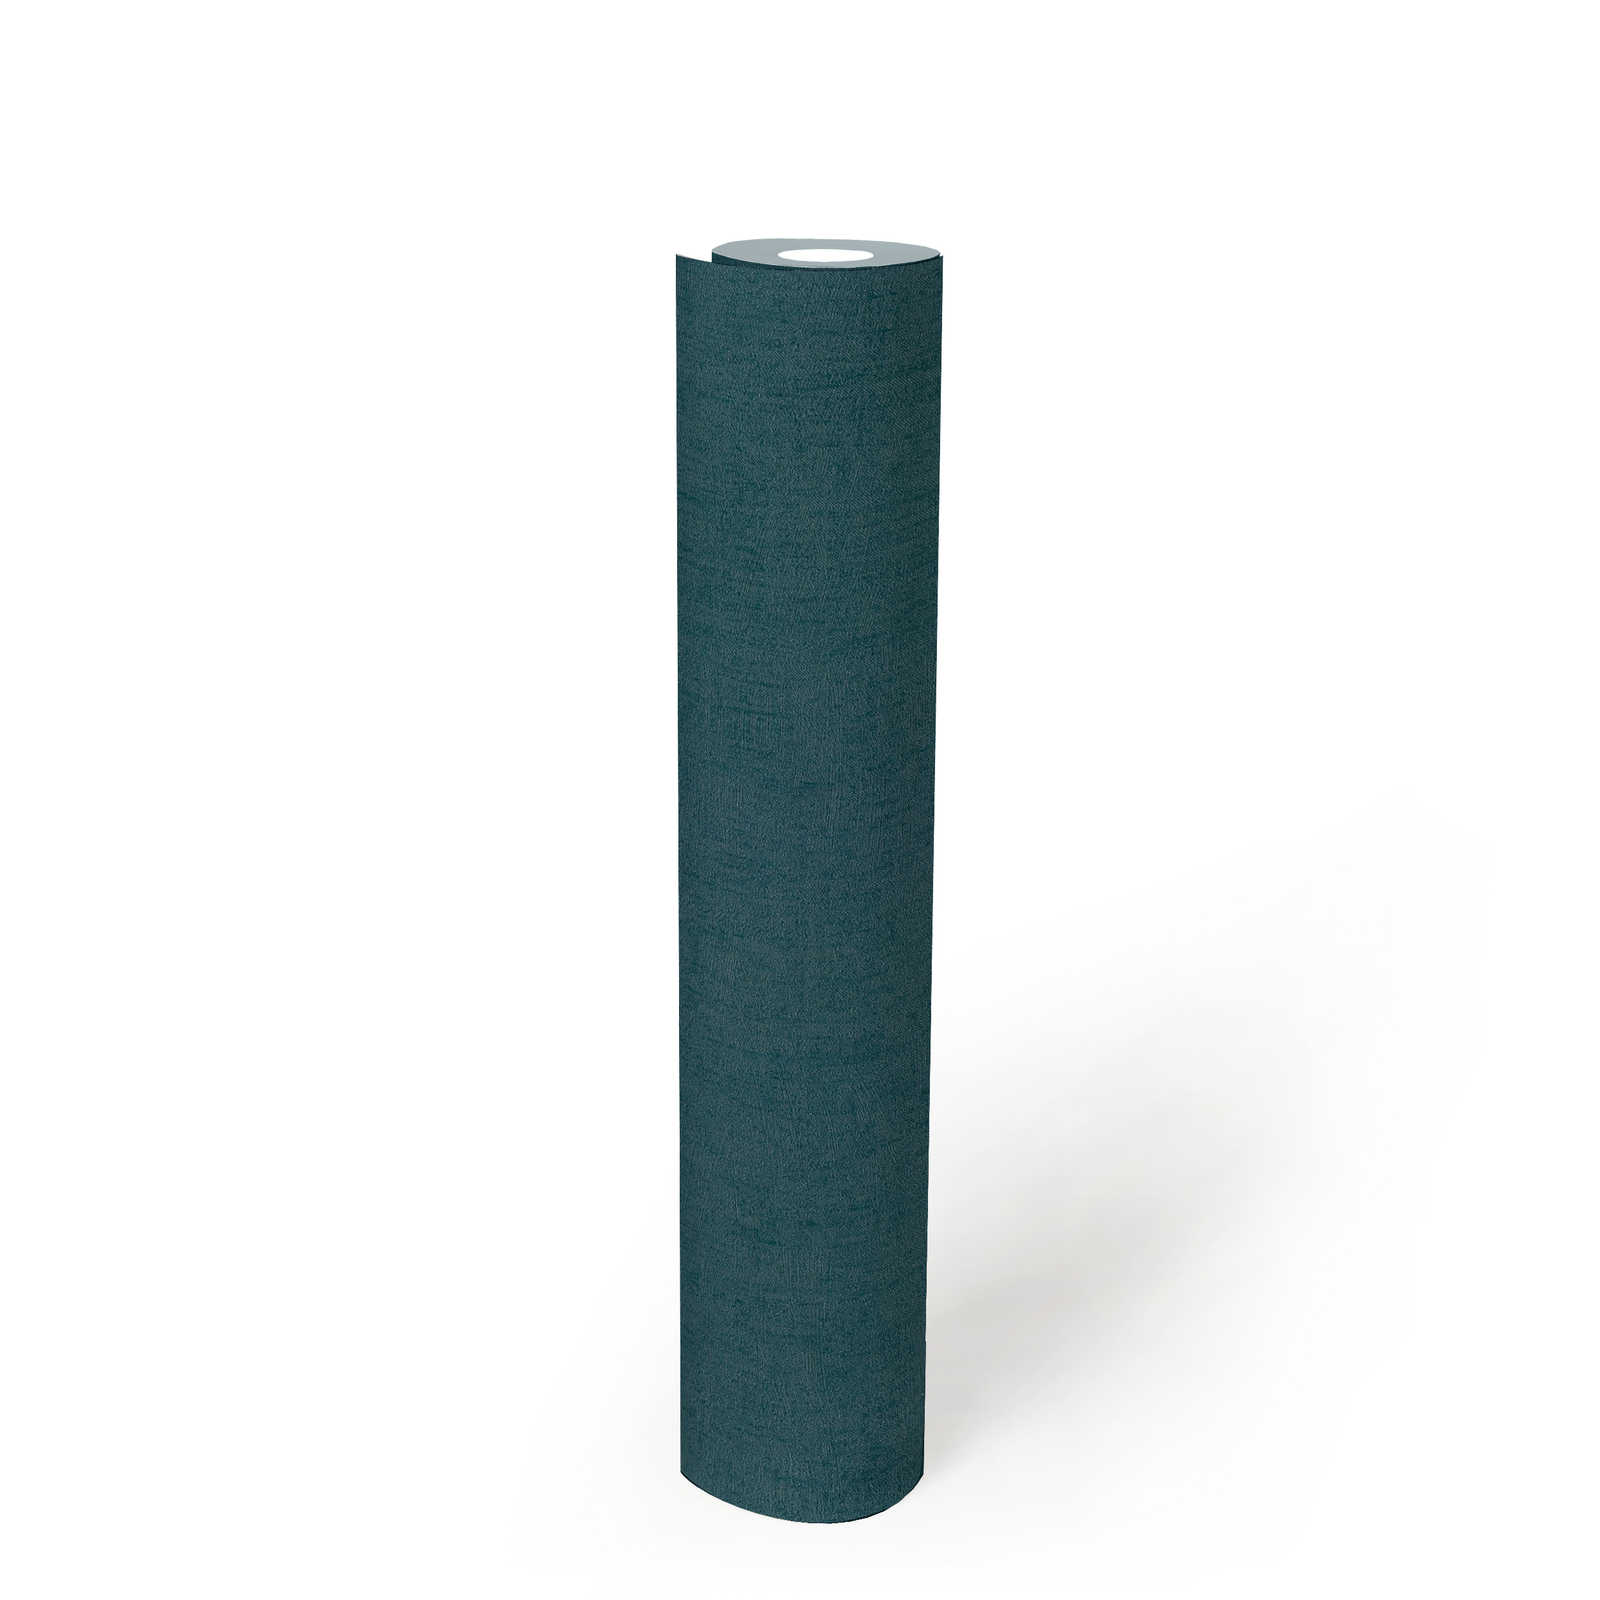             Structured wallpaper petrol with gloss effect - blue, green, metallic
        